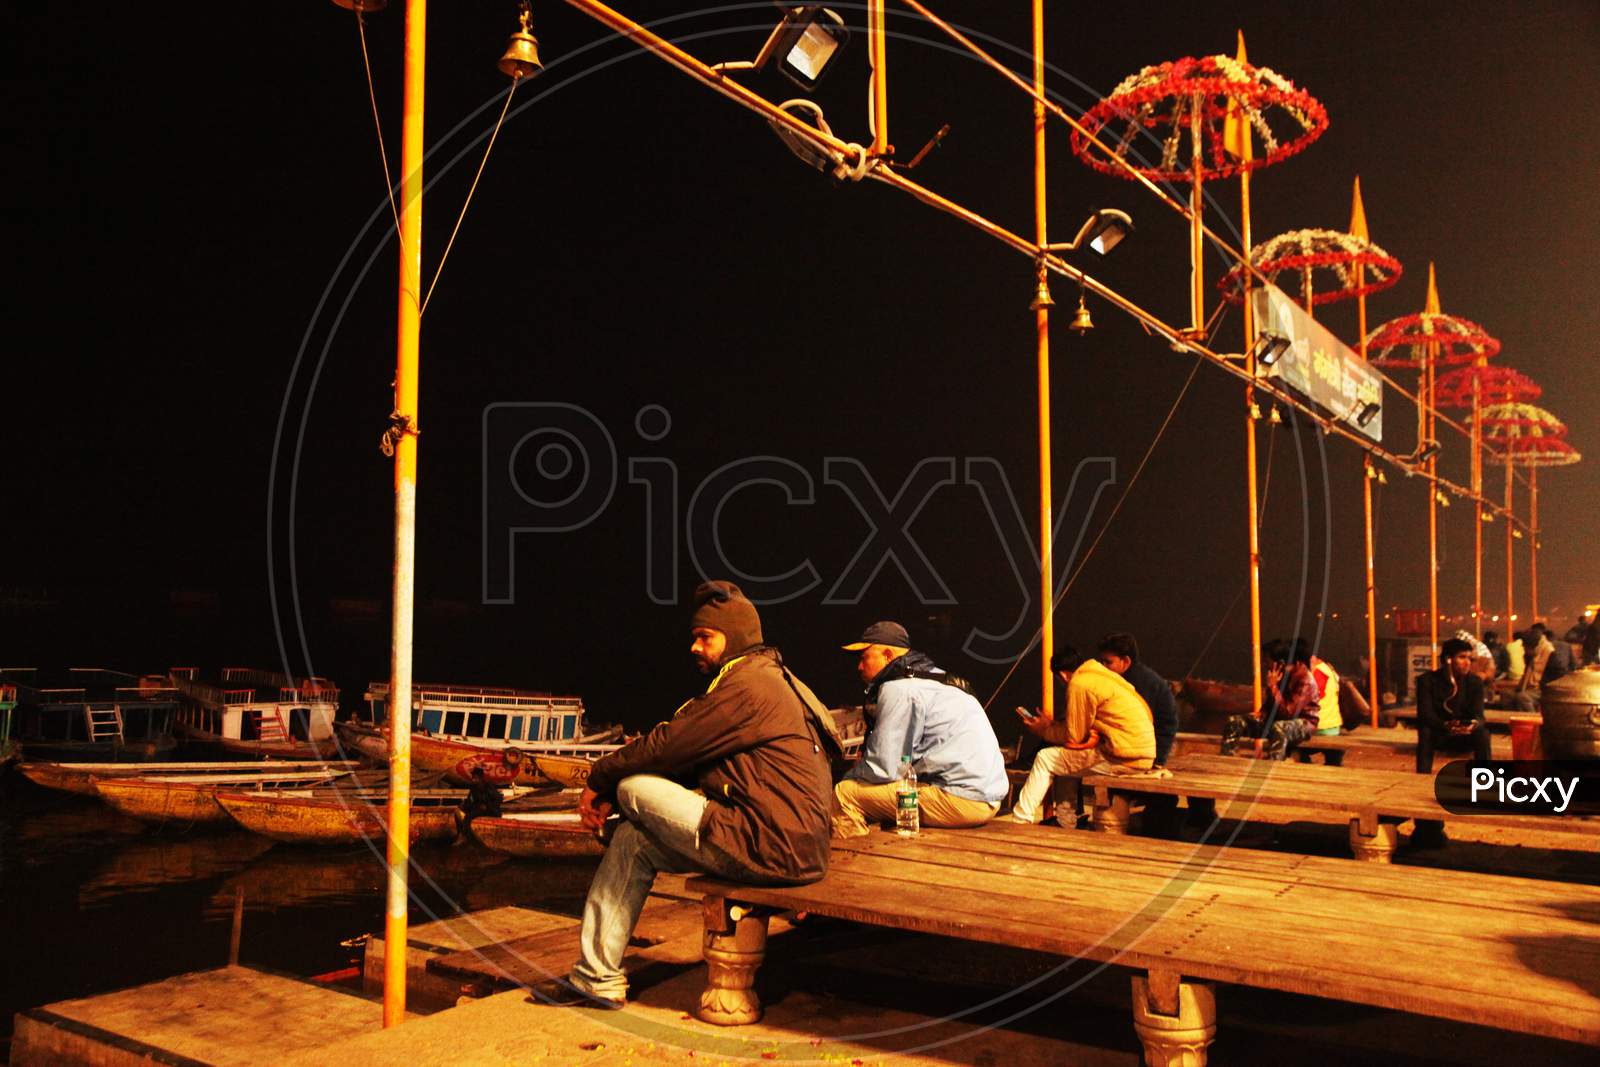 Local People near Ganga Ghat at Varanasi